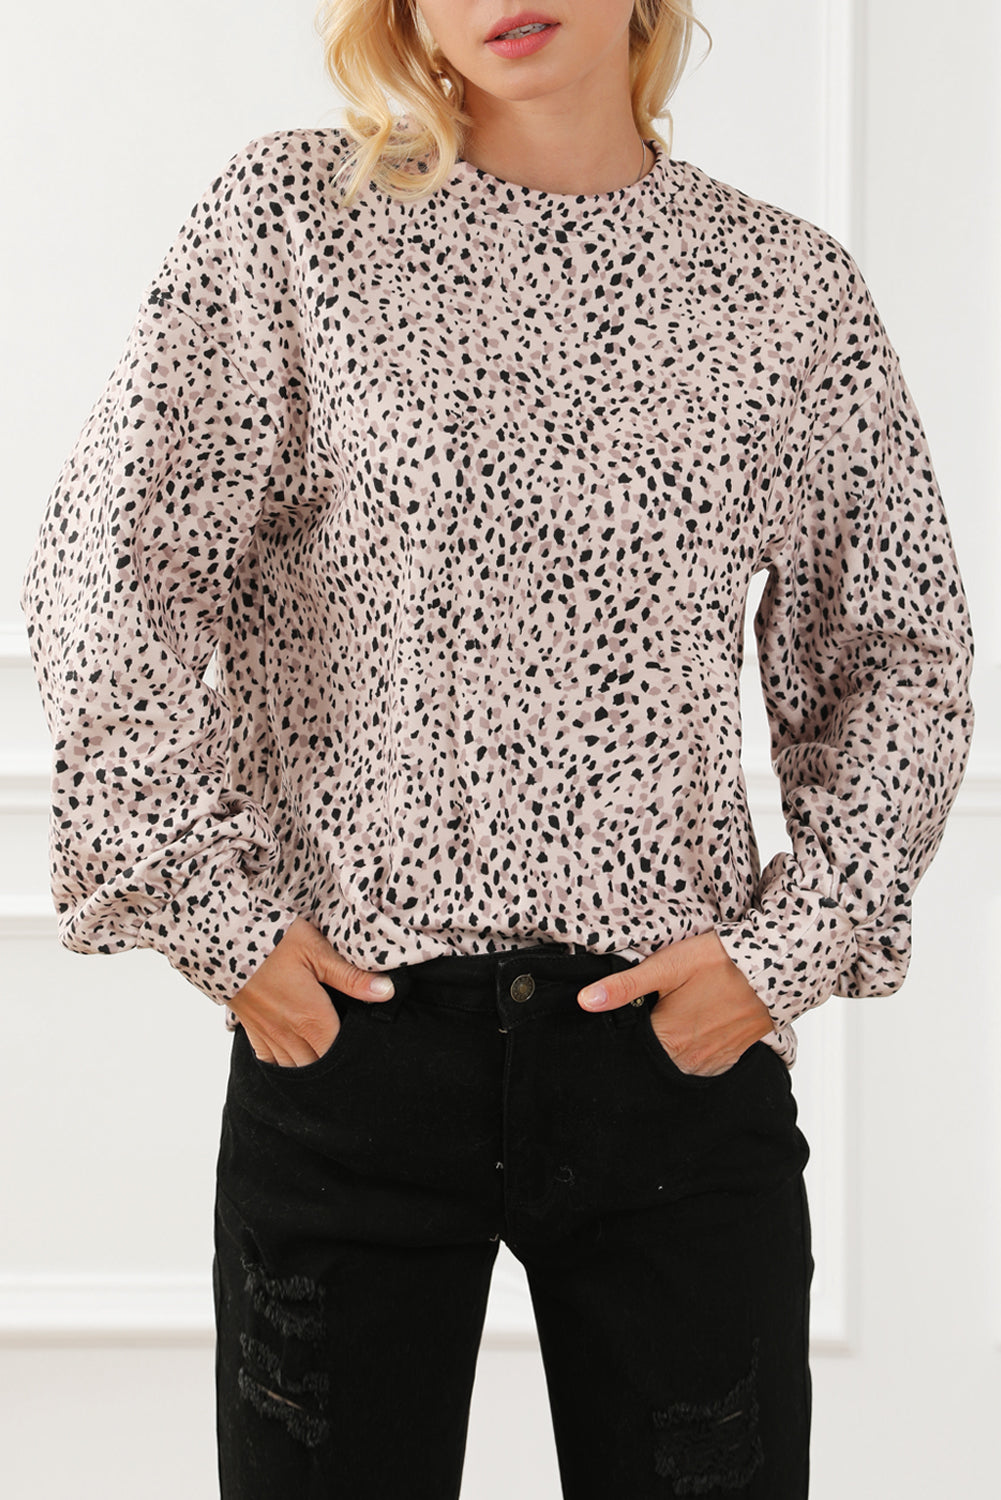 Leopard Boyfriend majica s okruglim izrezom i leopard bojom